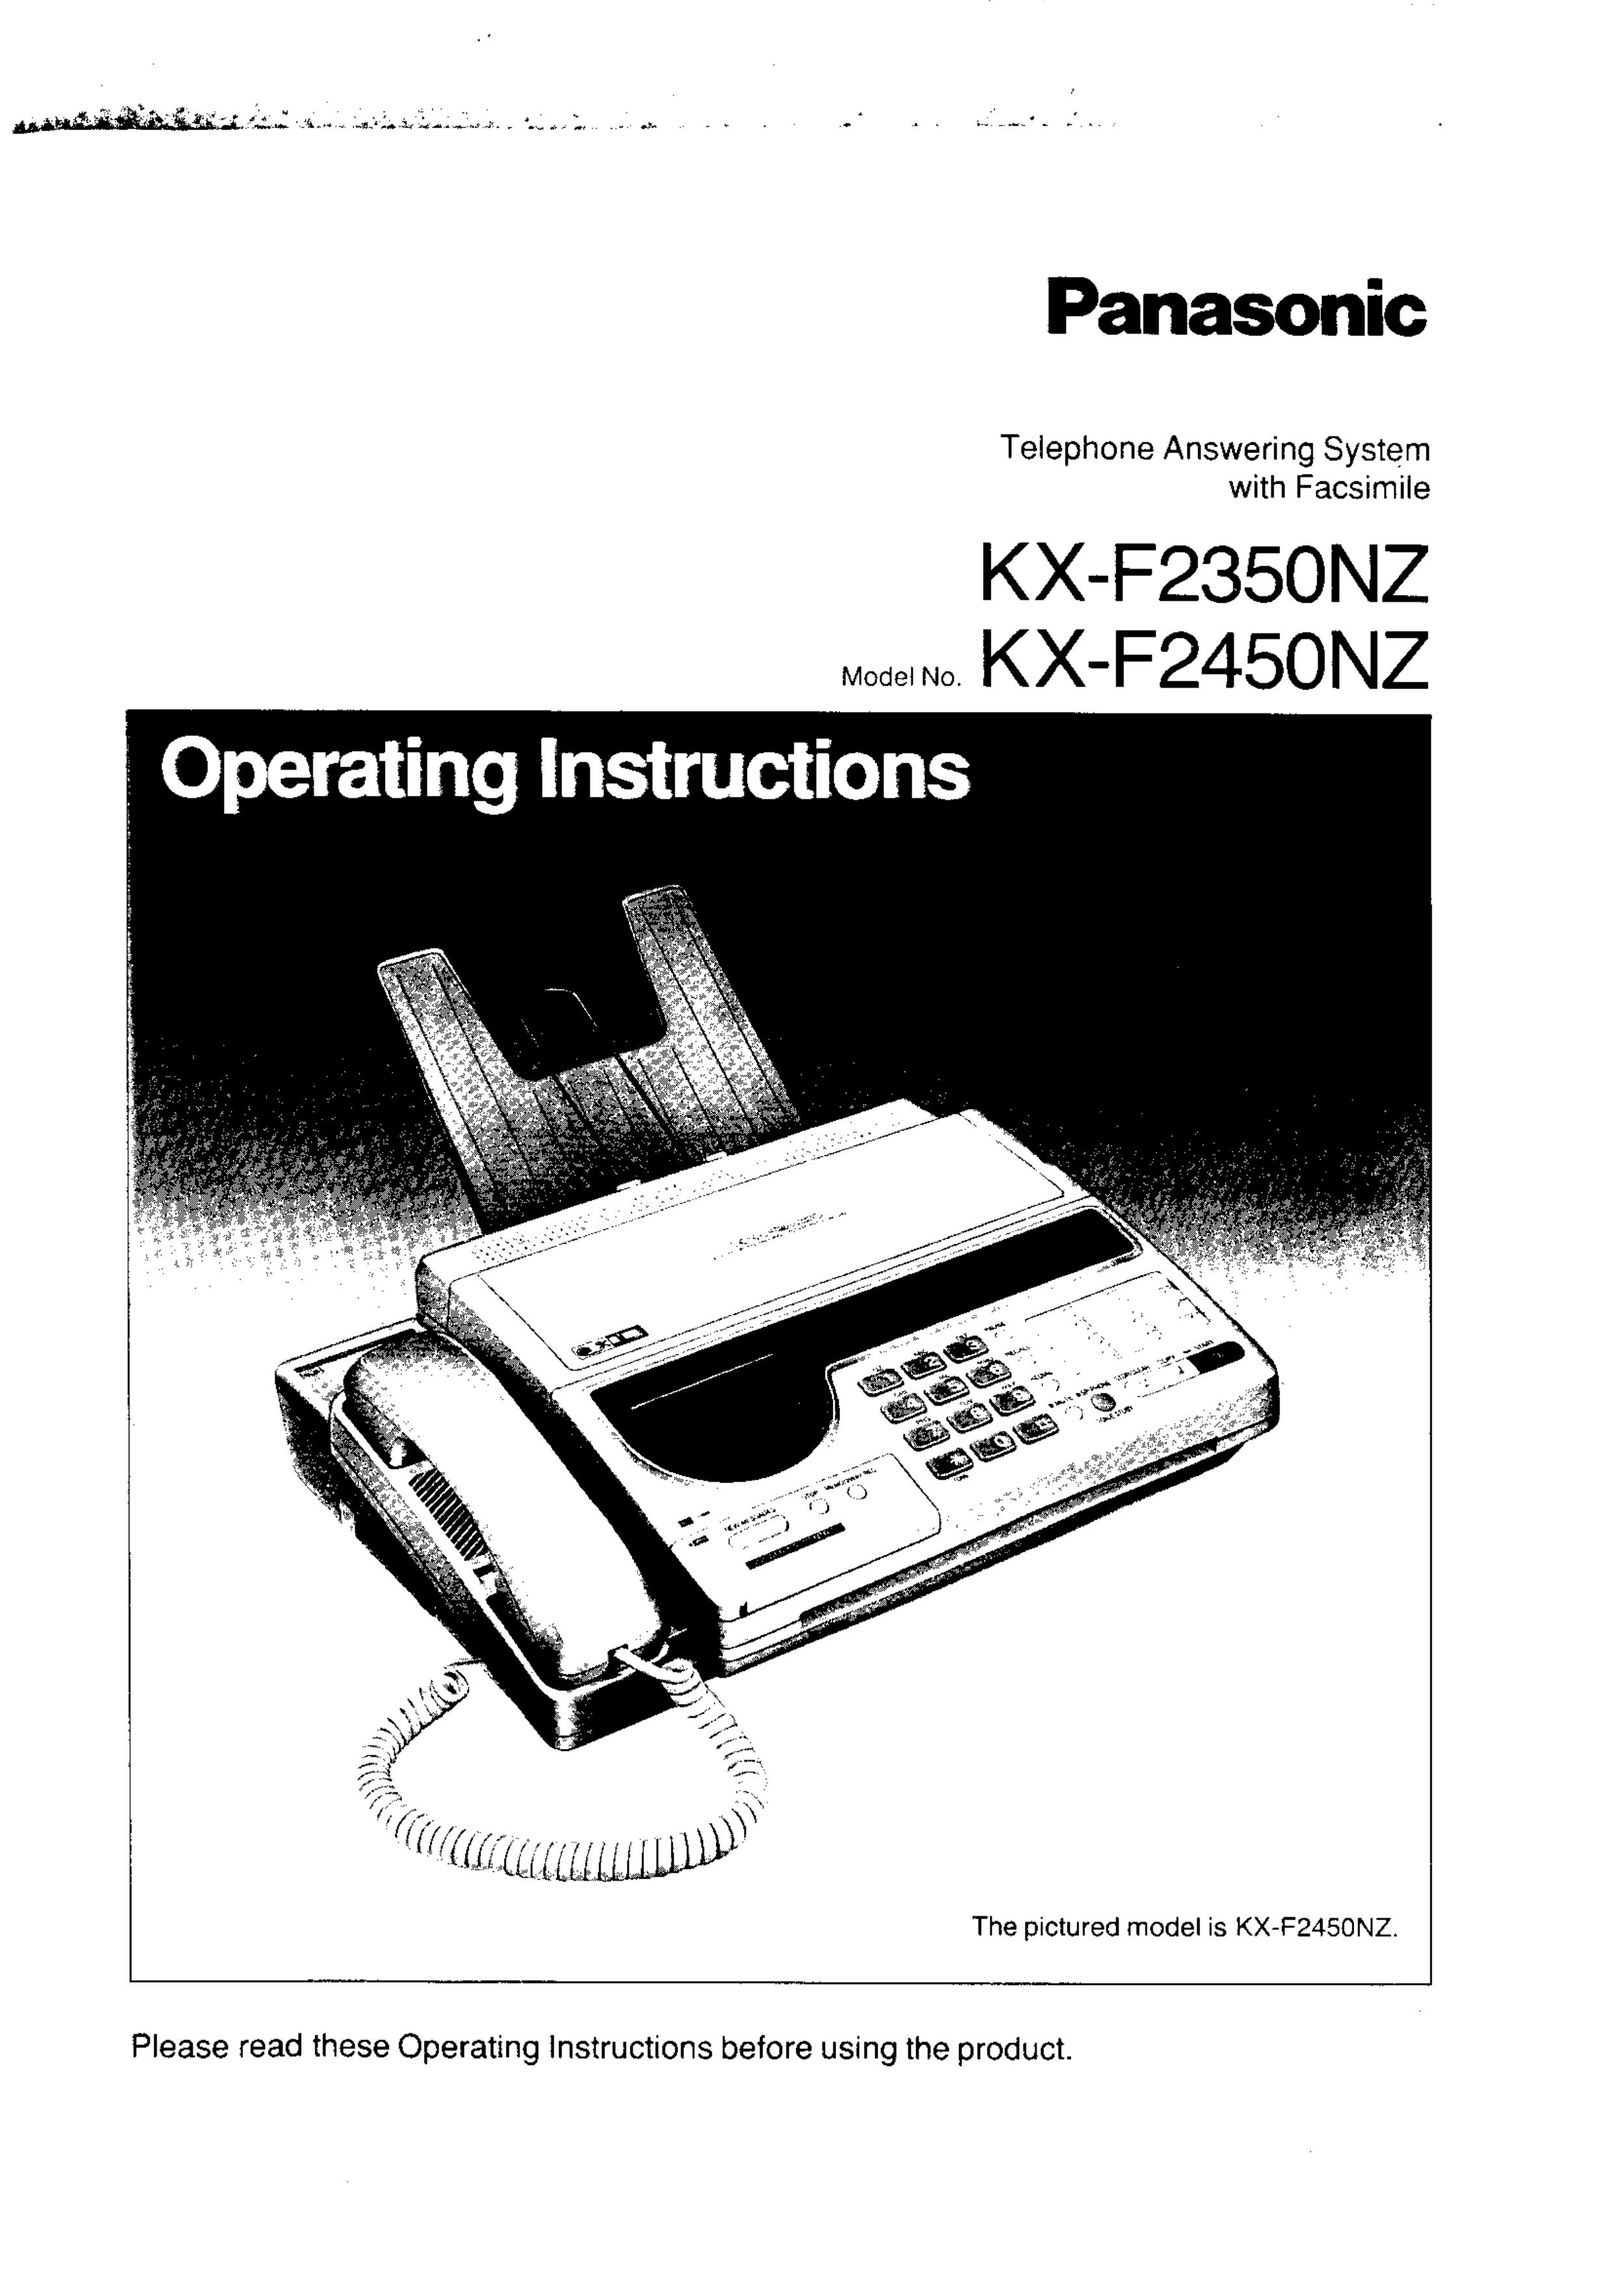 Panasonic KX-F2350NZ Answering Machine User Manual